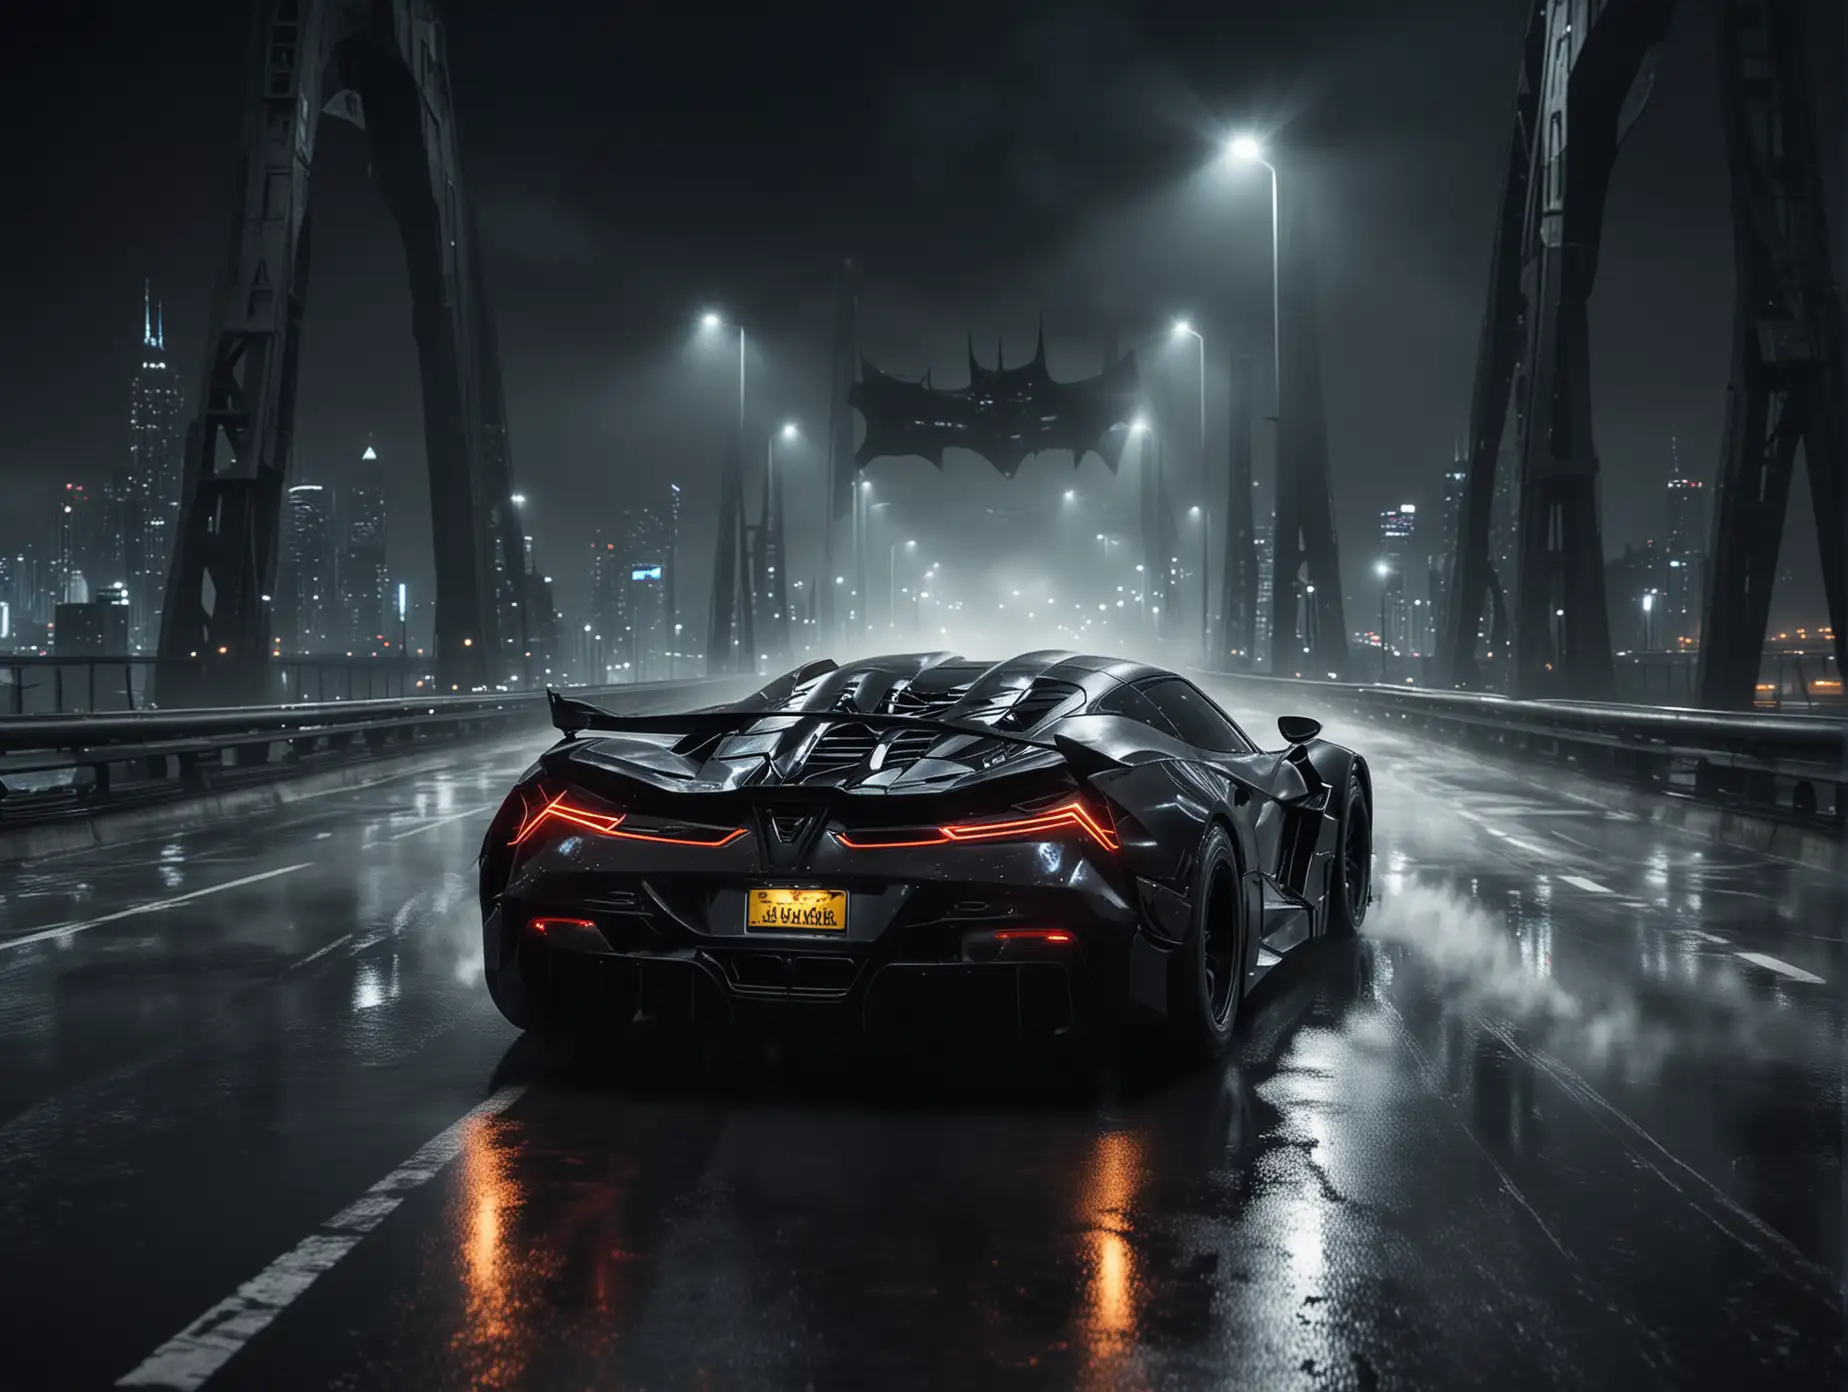 Futuristic-Batman-Concert-with-Drifting-Cars-on-Night-City-Bridge